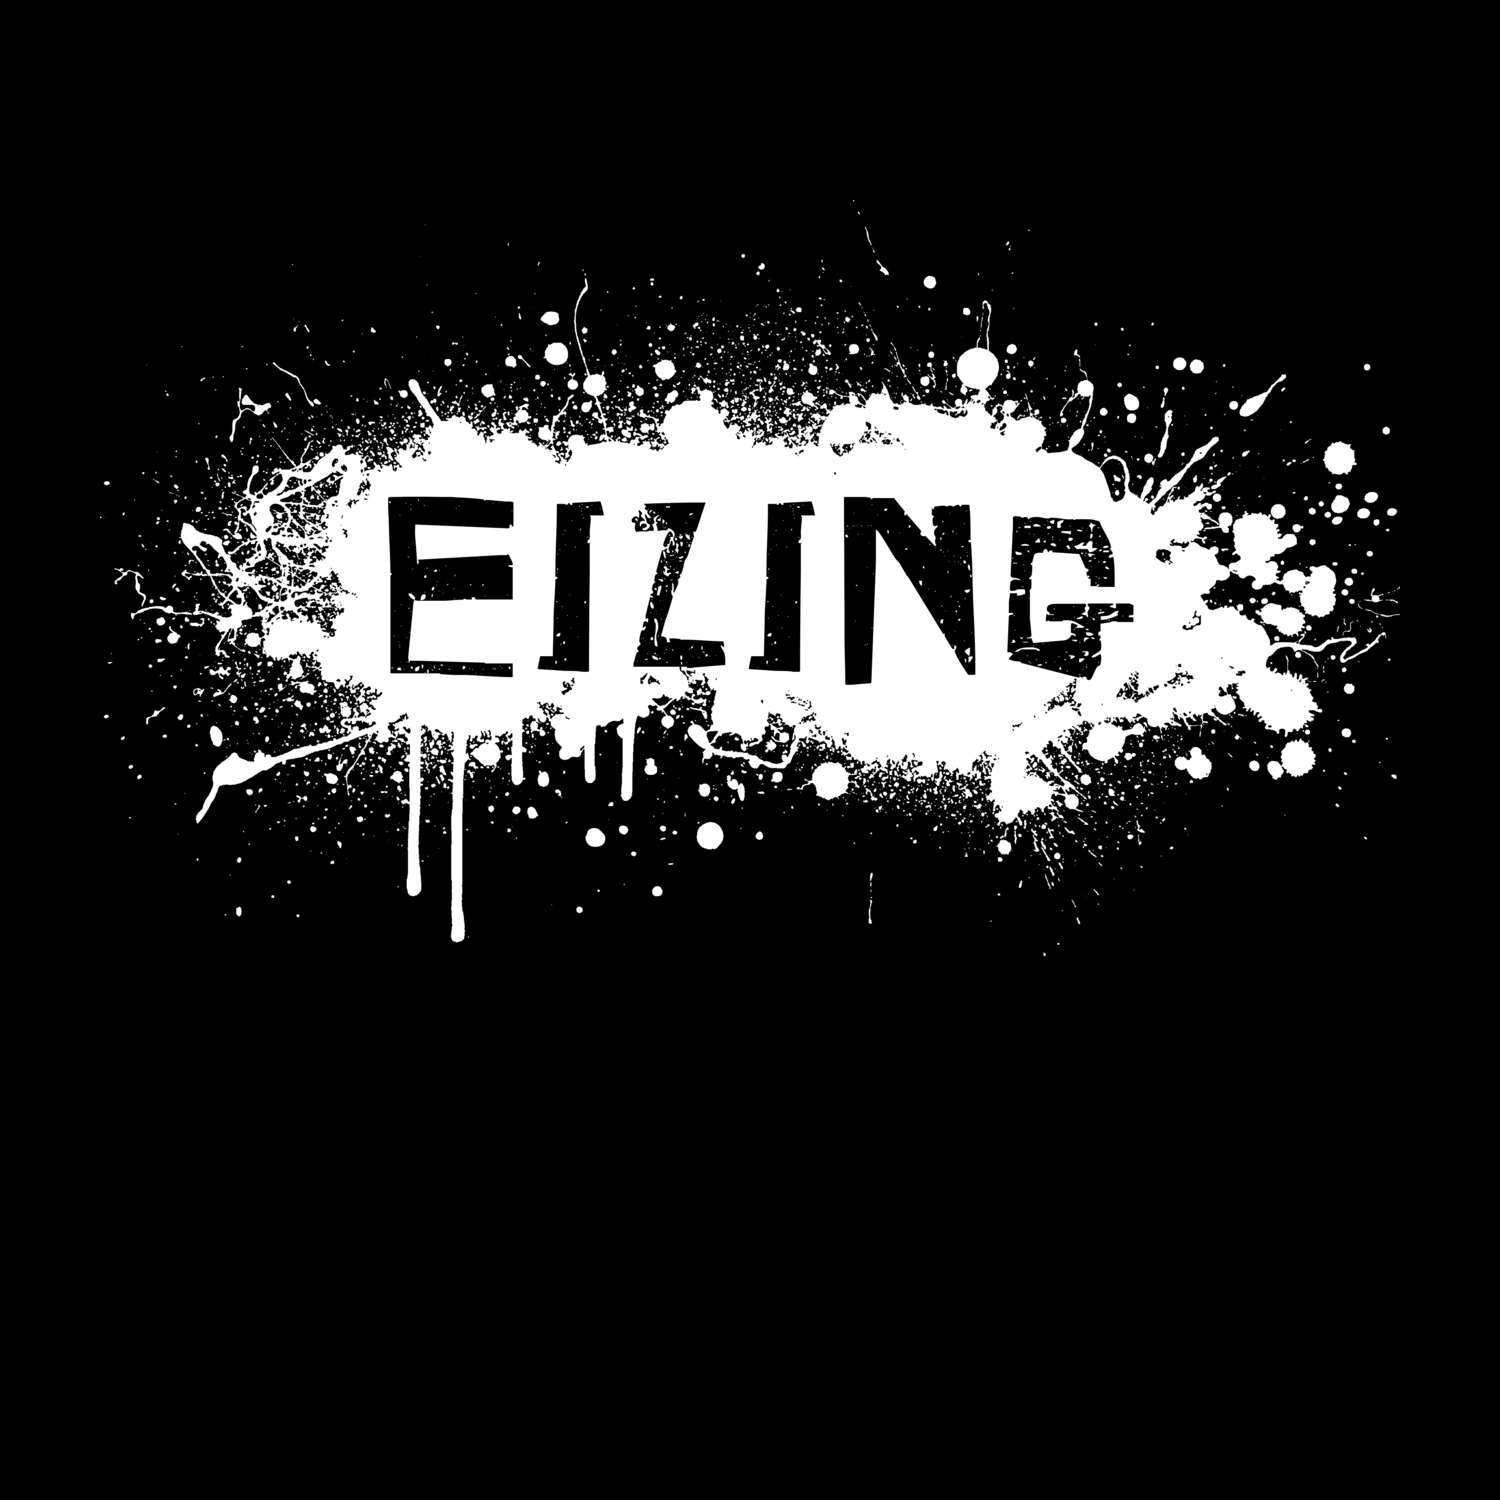 Eizing T-Shirt »Paint Splash Punk«